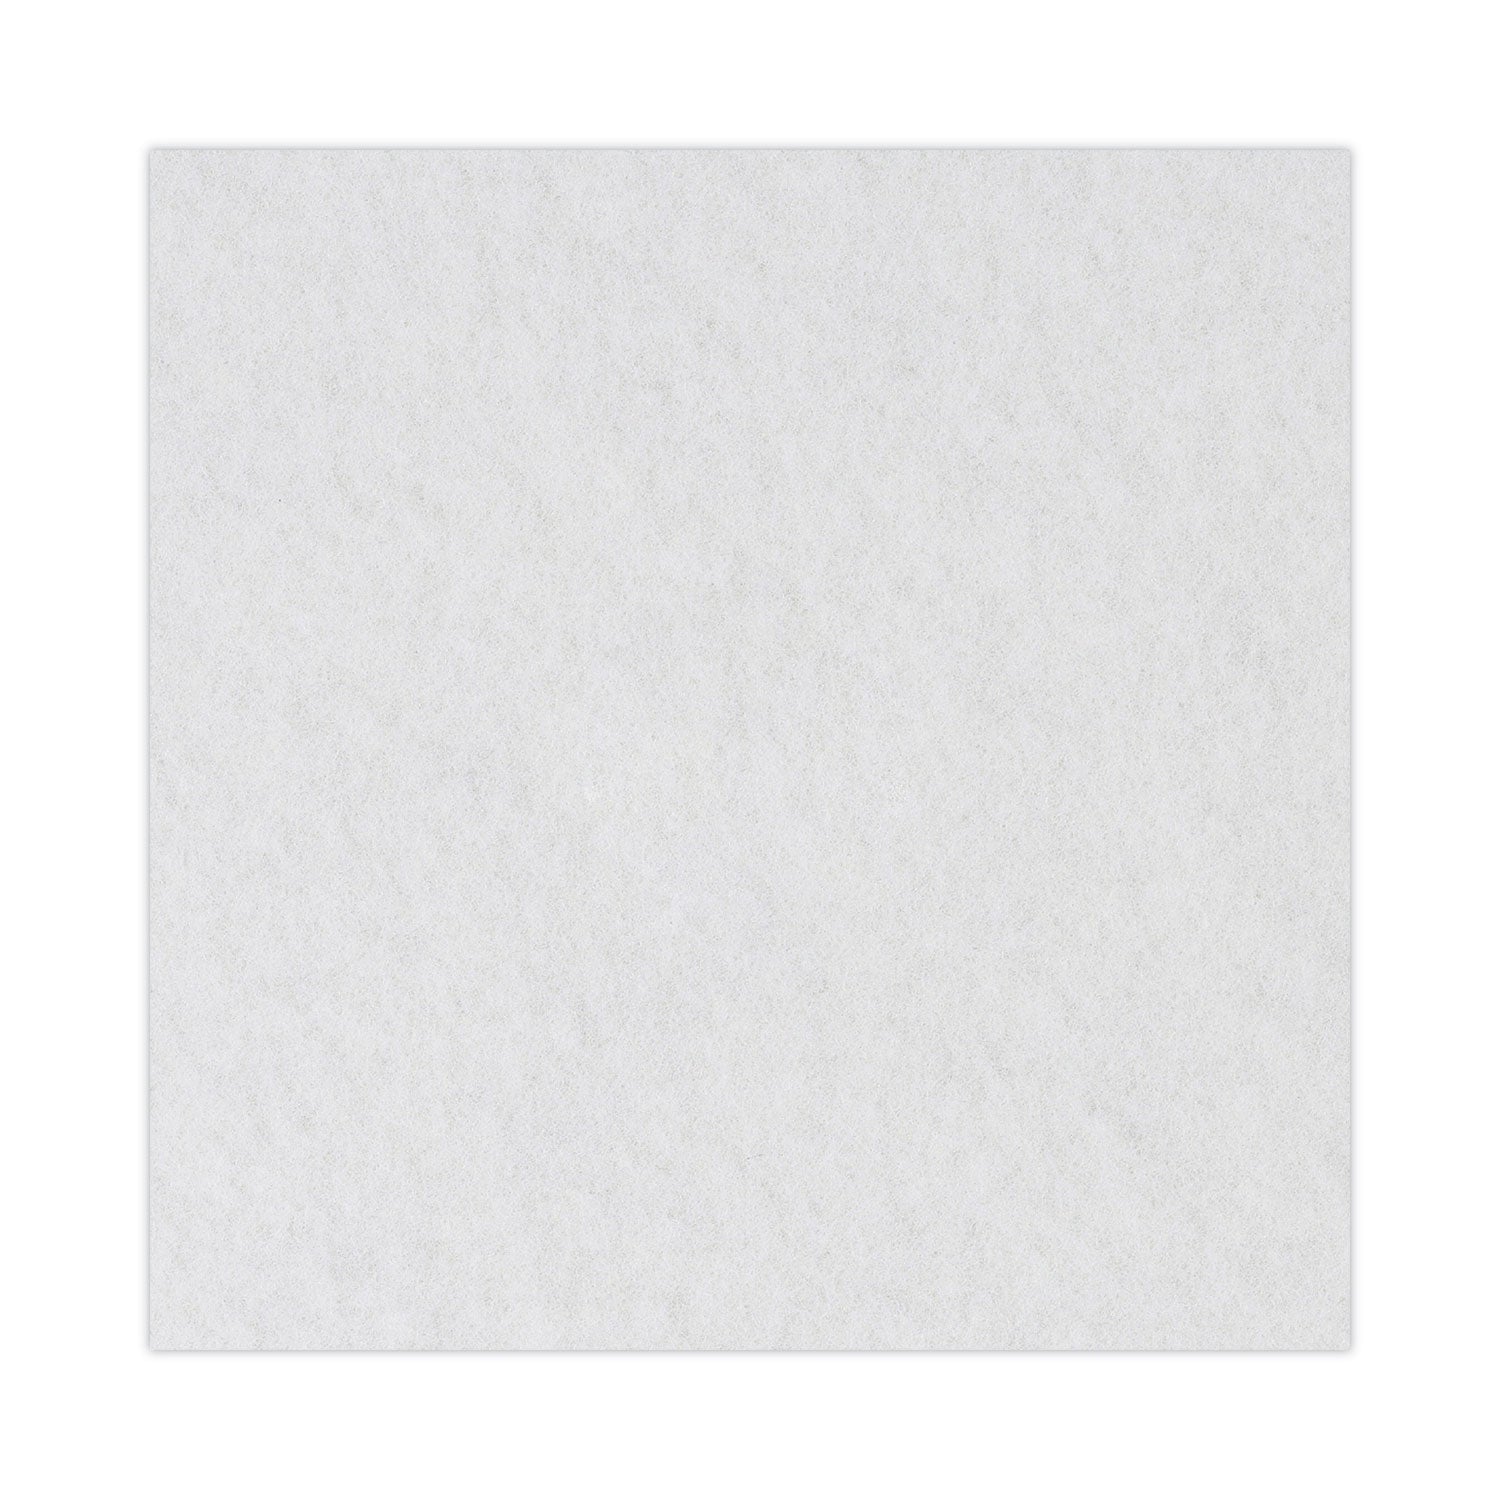 polishing-floor-pads-21-diameter-white-5-carton_bwk4021whi - 6